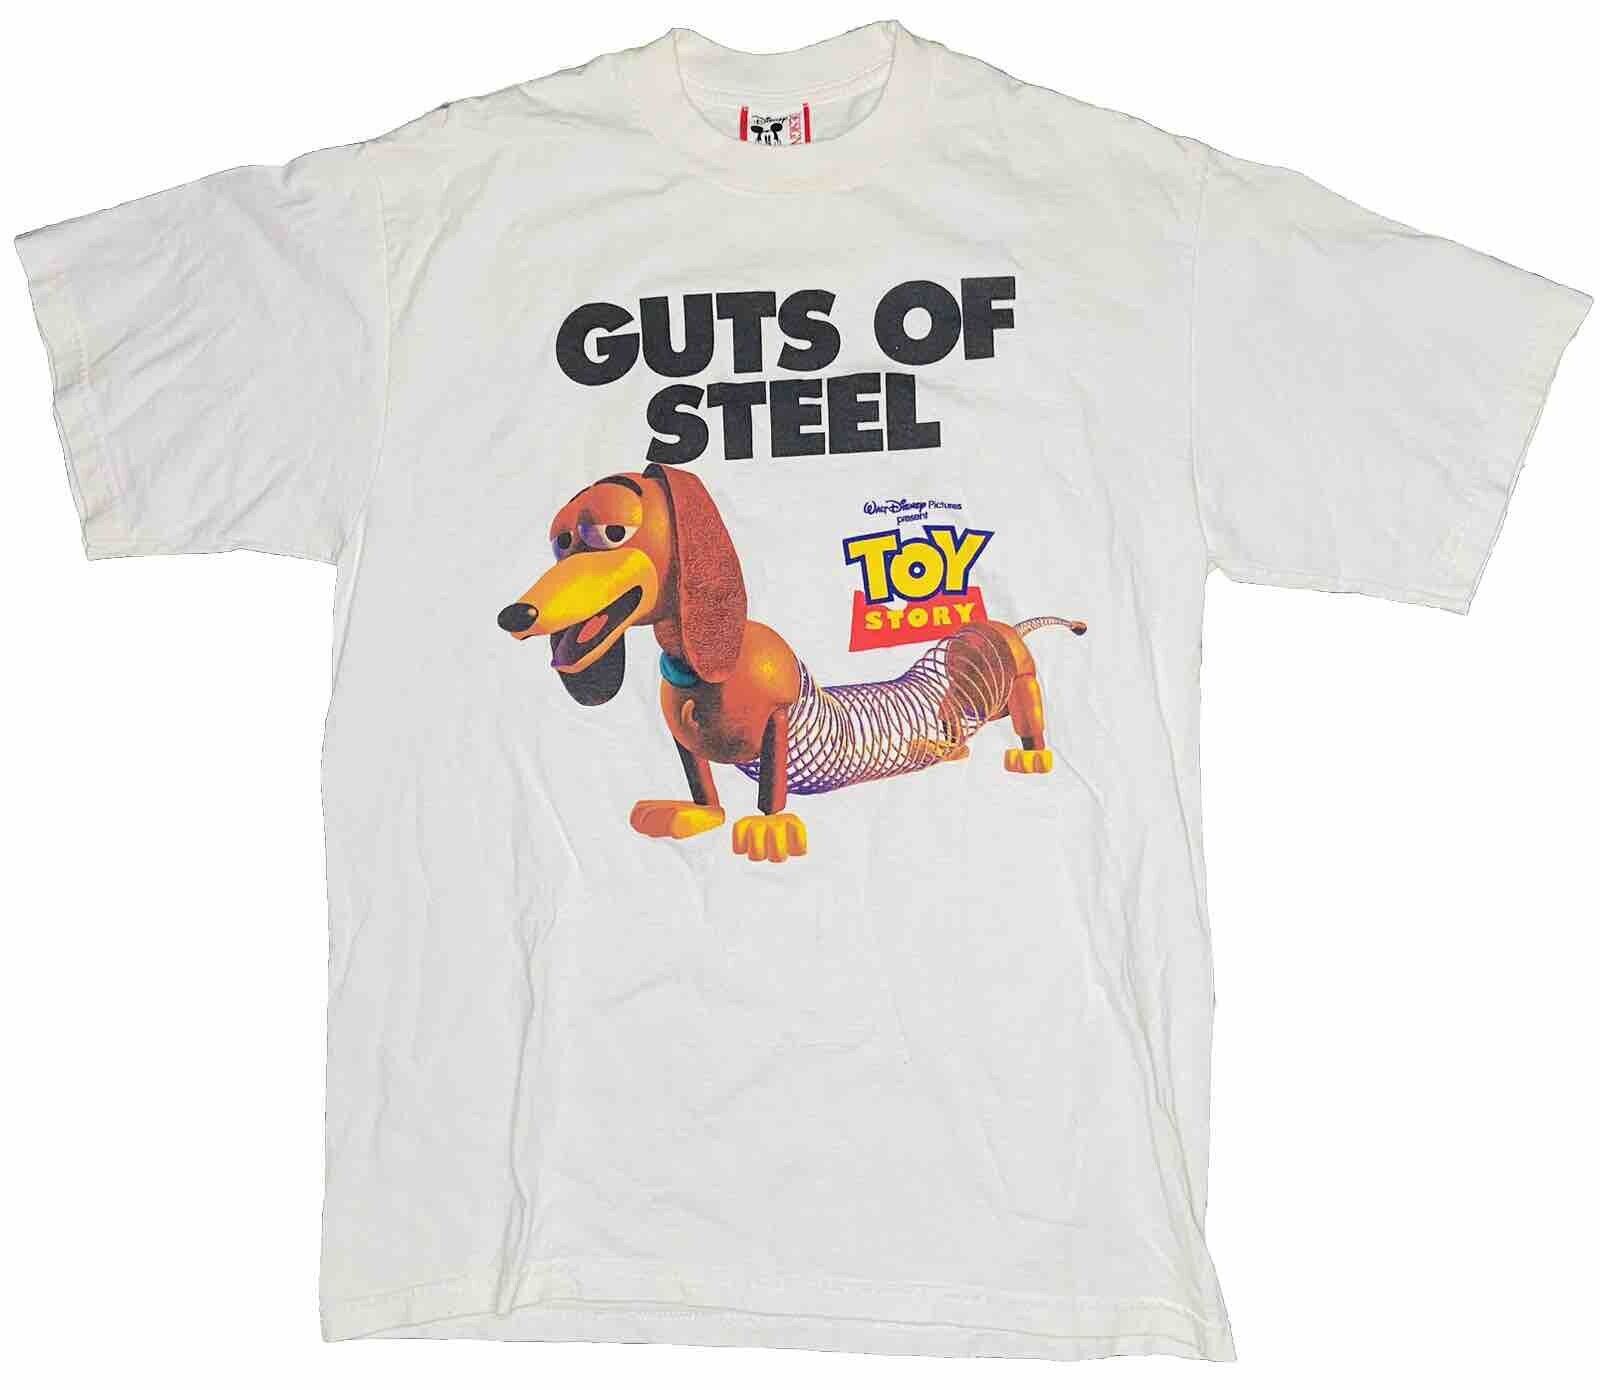 *VTG* Disney Designs Pixar Toy Story '95 Promo Slinky Dog Guts of Steel Shirt; L